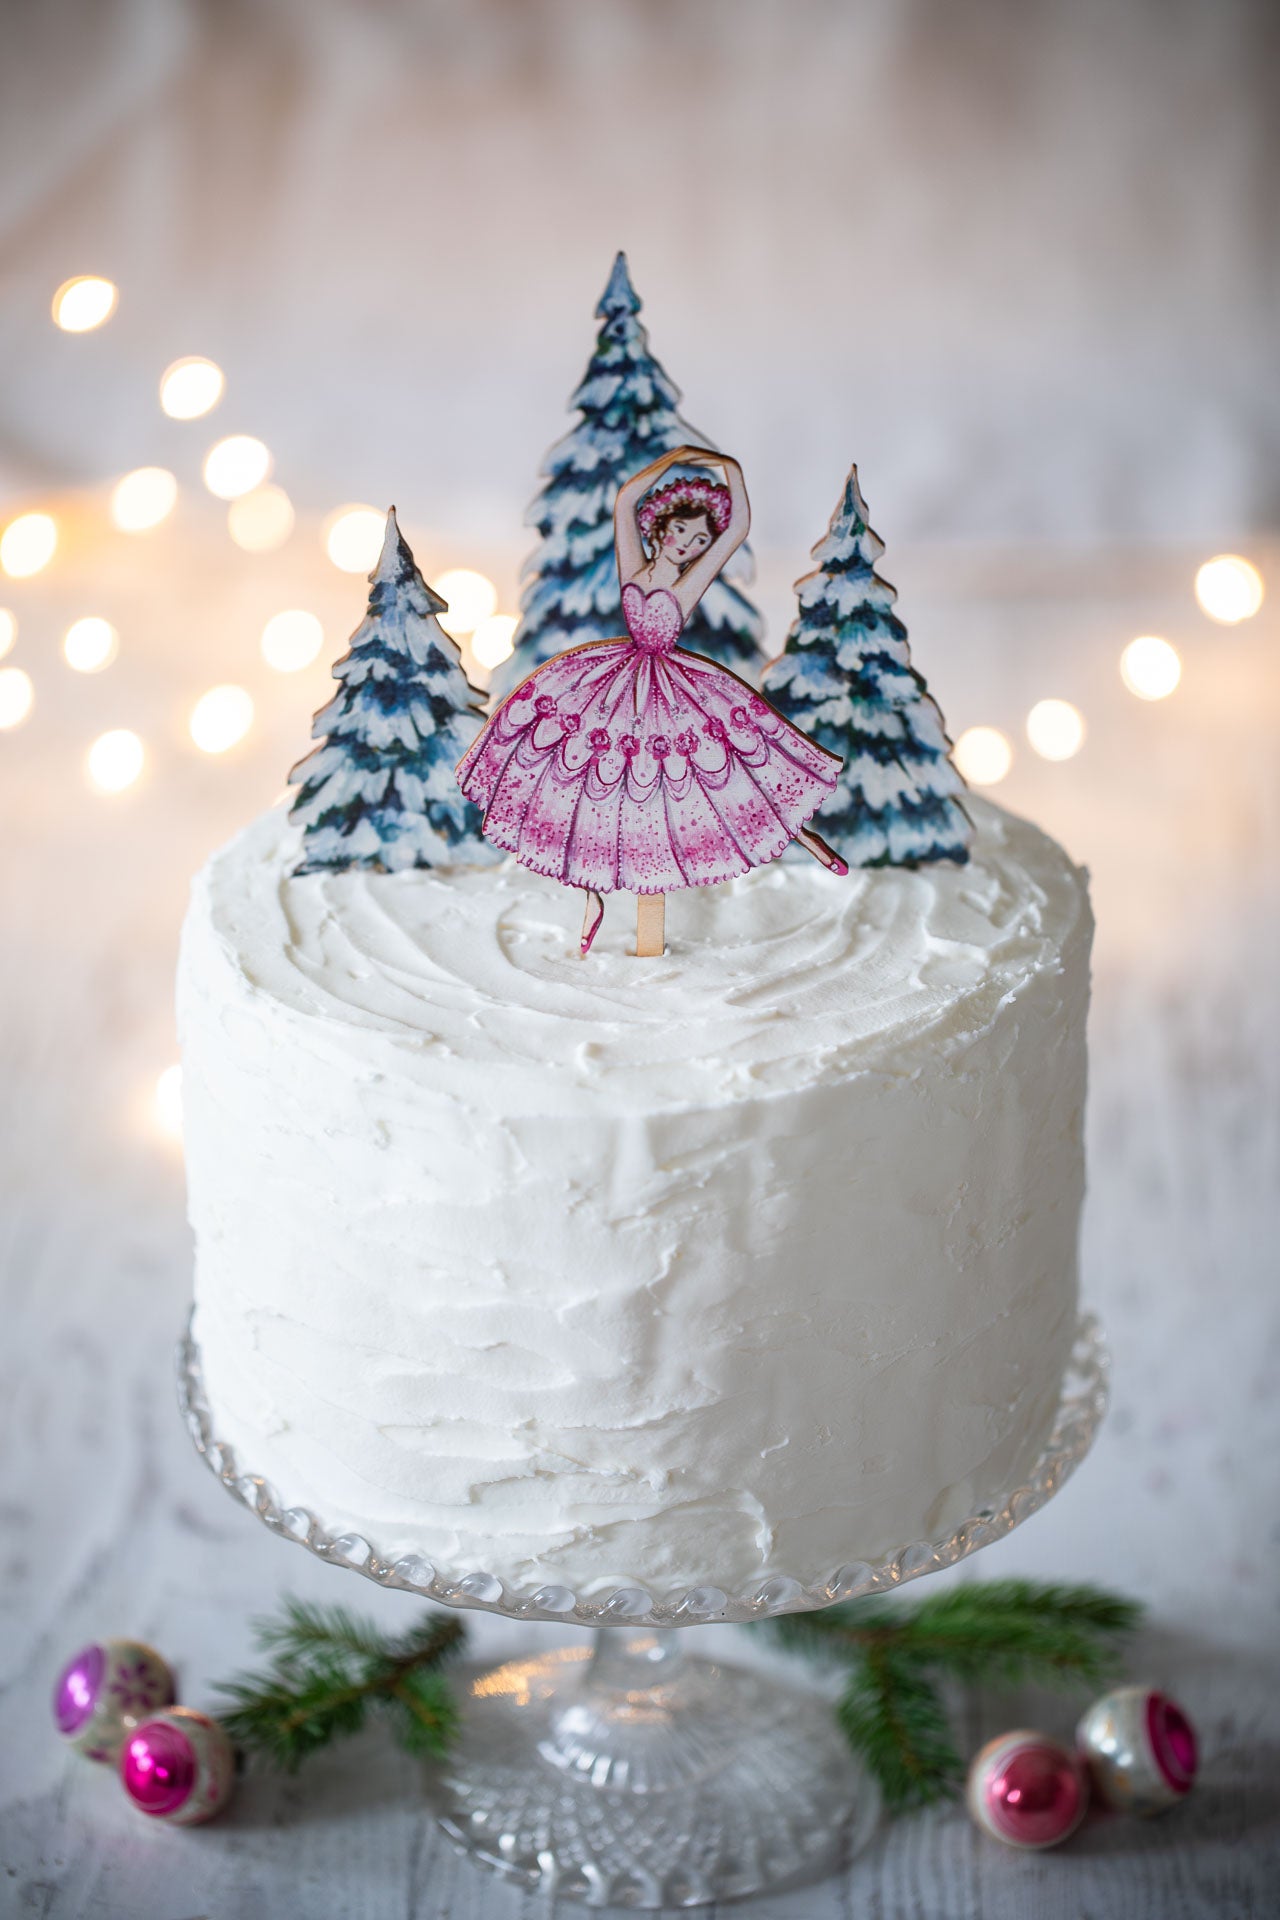 Sugarplum Fairy - Wooden Cake Topper